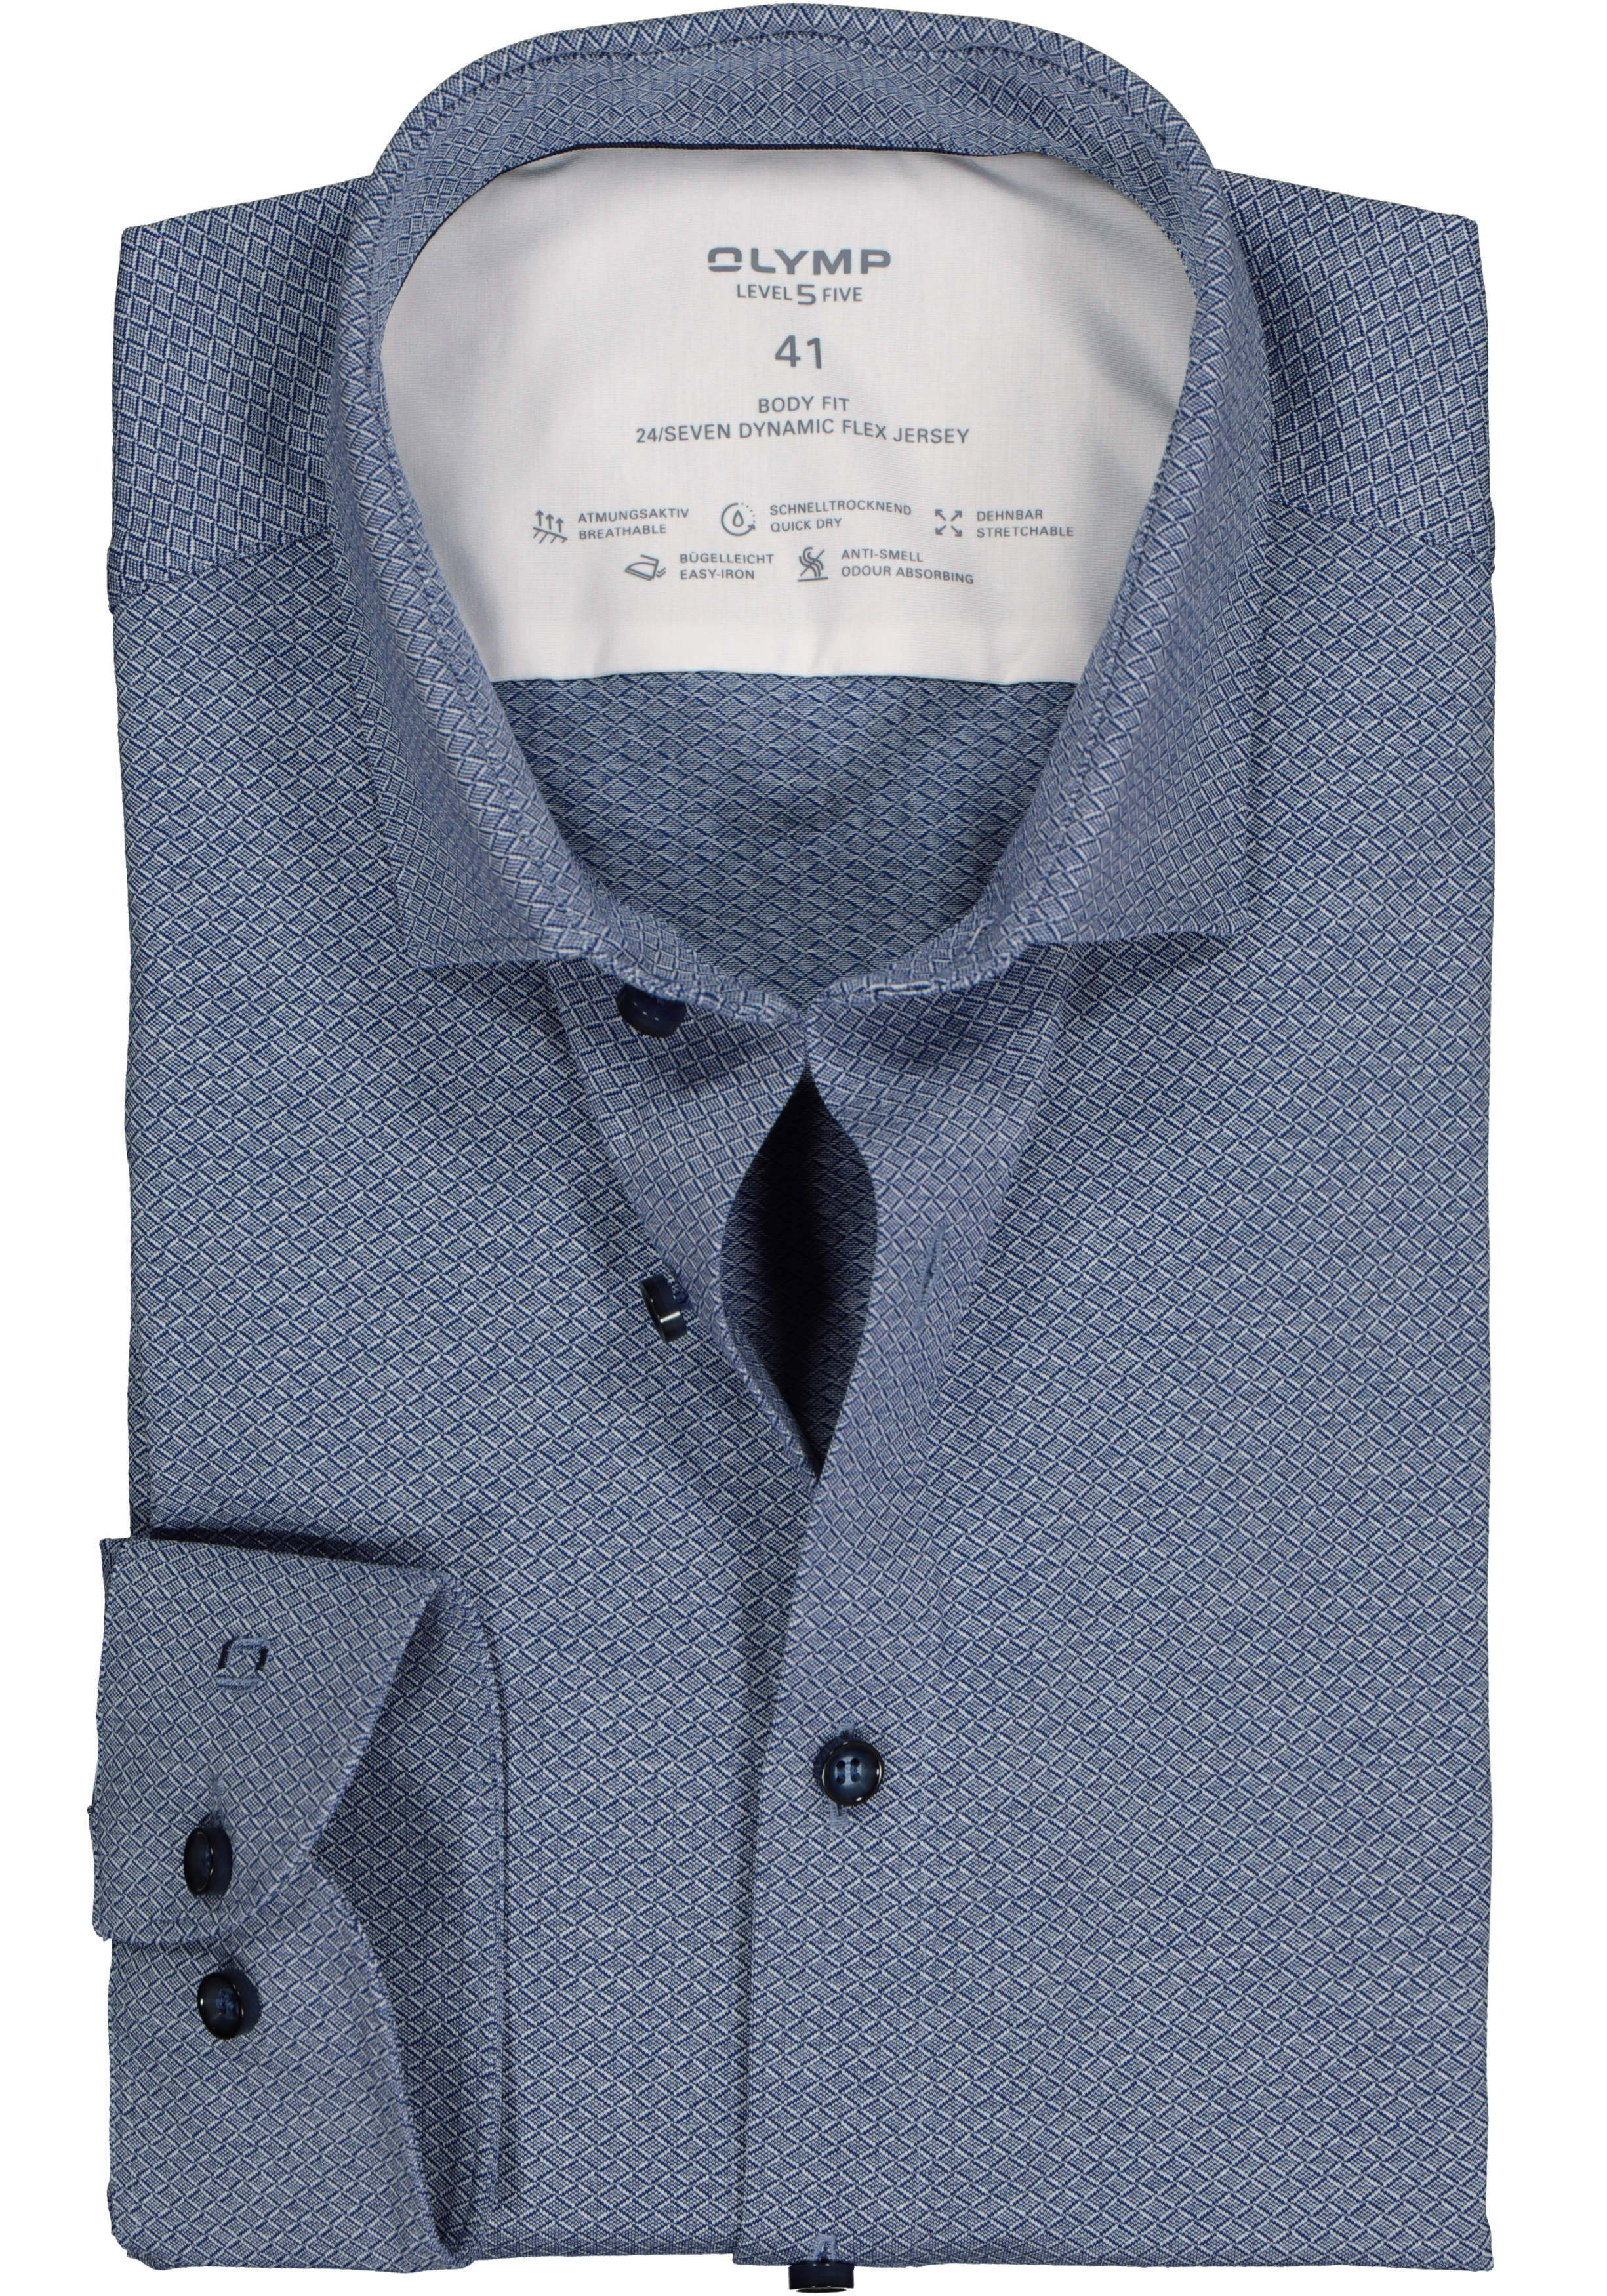 OLYMP Level 5 body fit overhemd 24/7, royal blauw structuur tricot - SALE  met kortingen tot 70% | Businesshemden